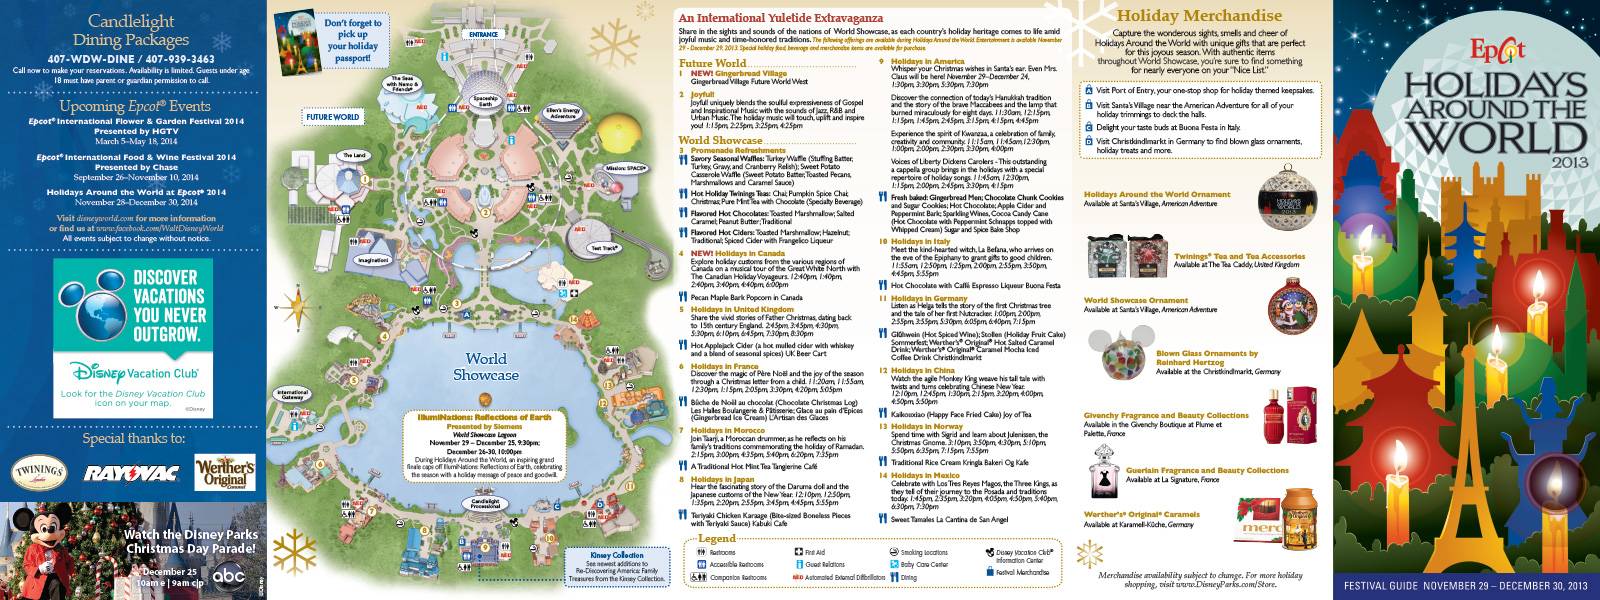 2013 Holidays Around the World guide